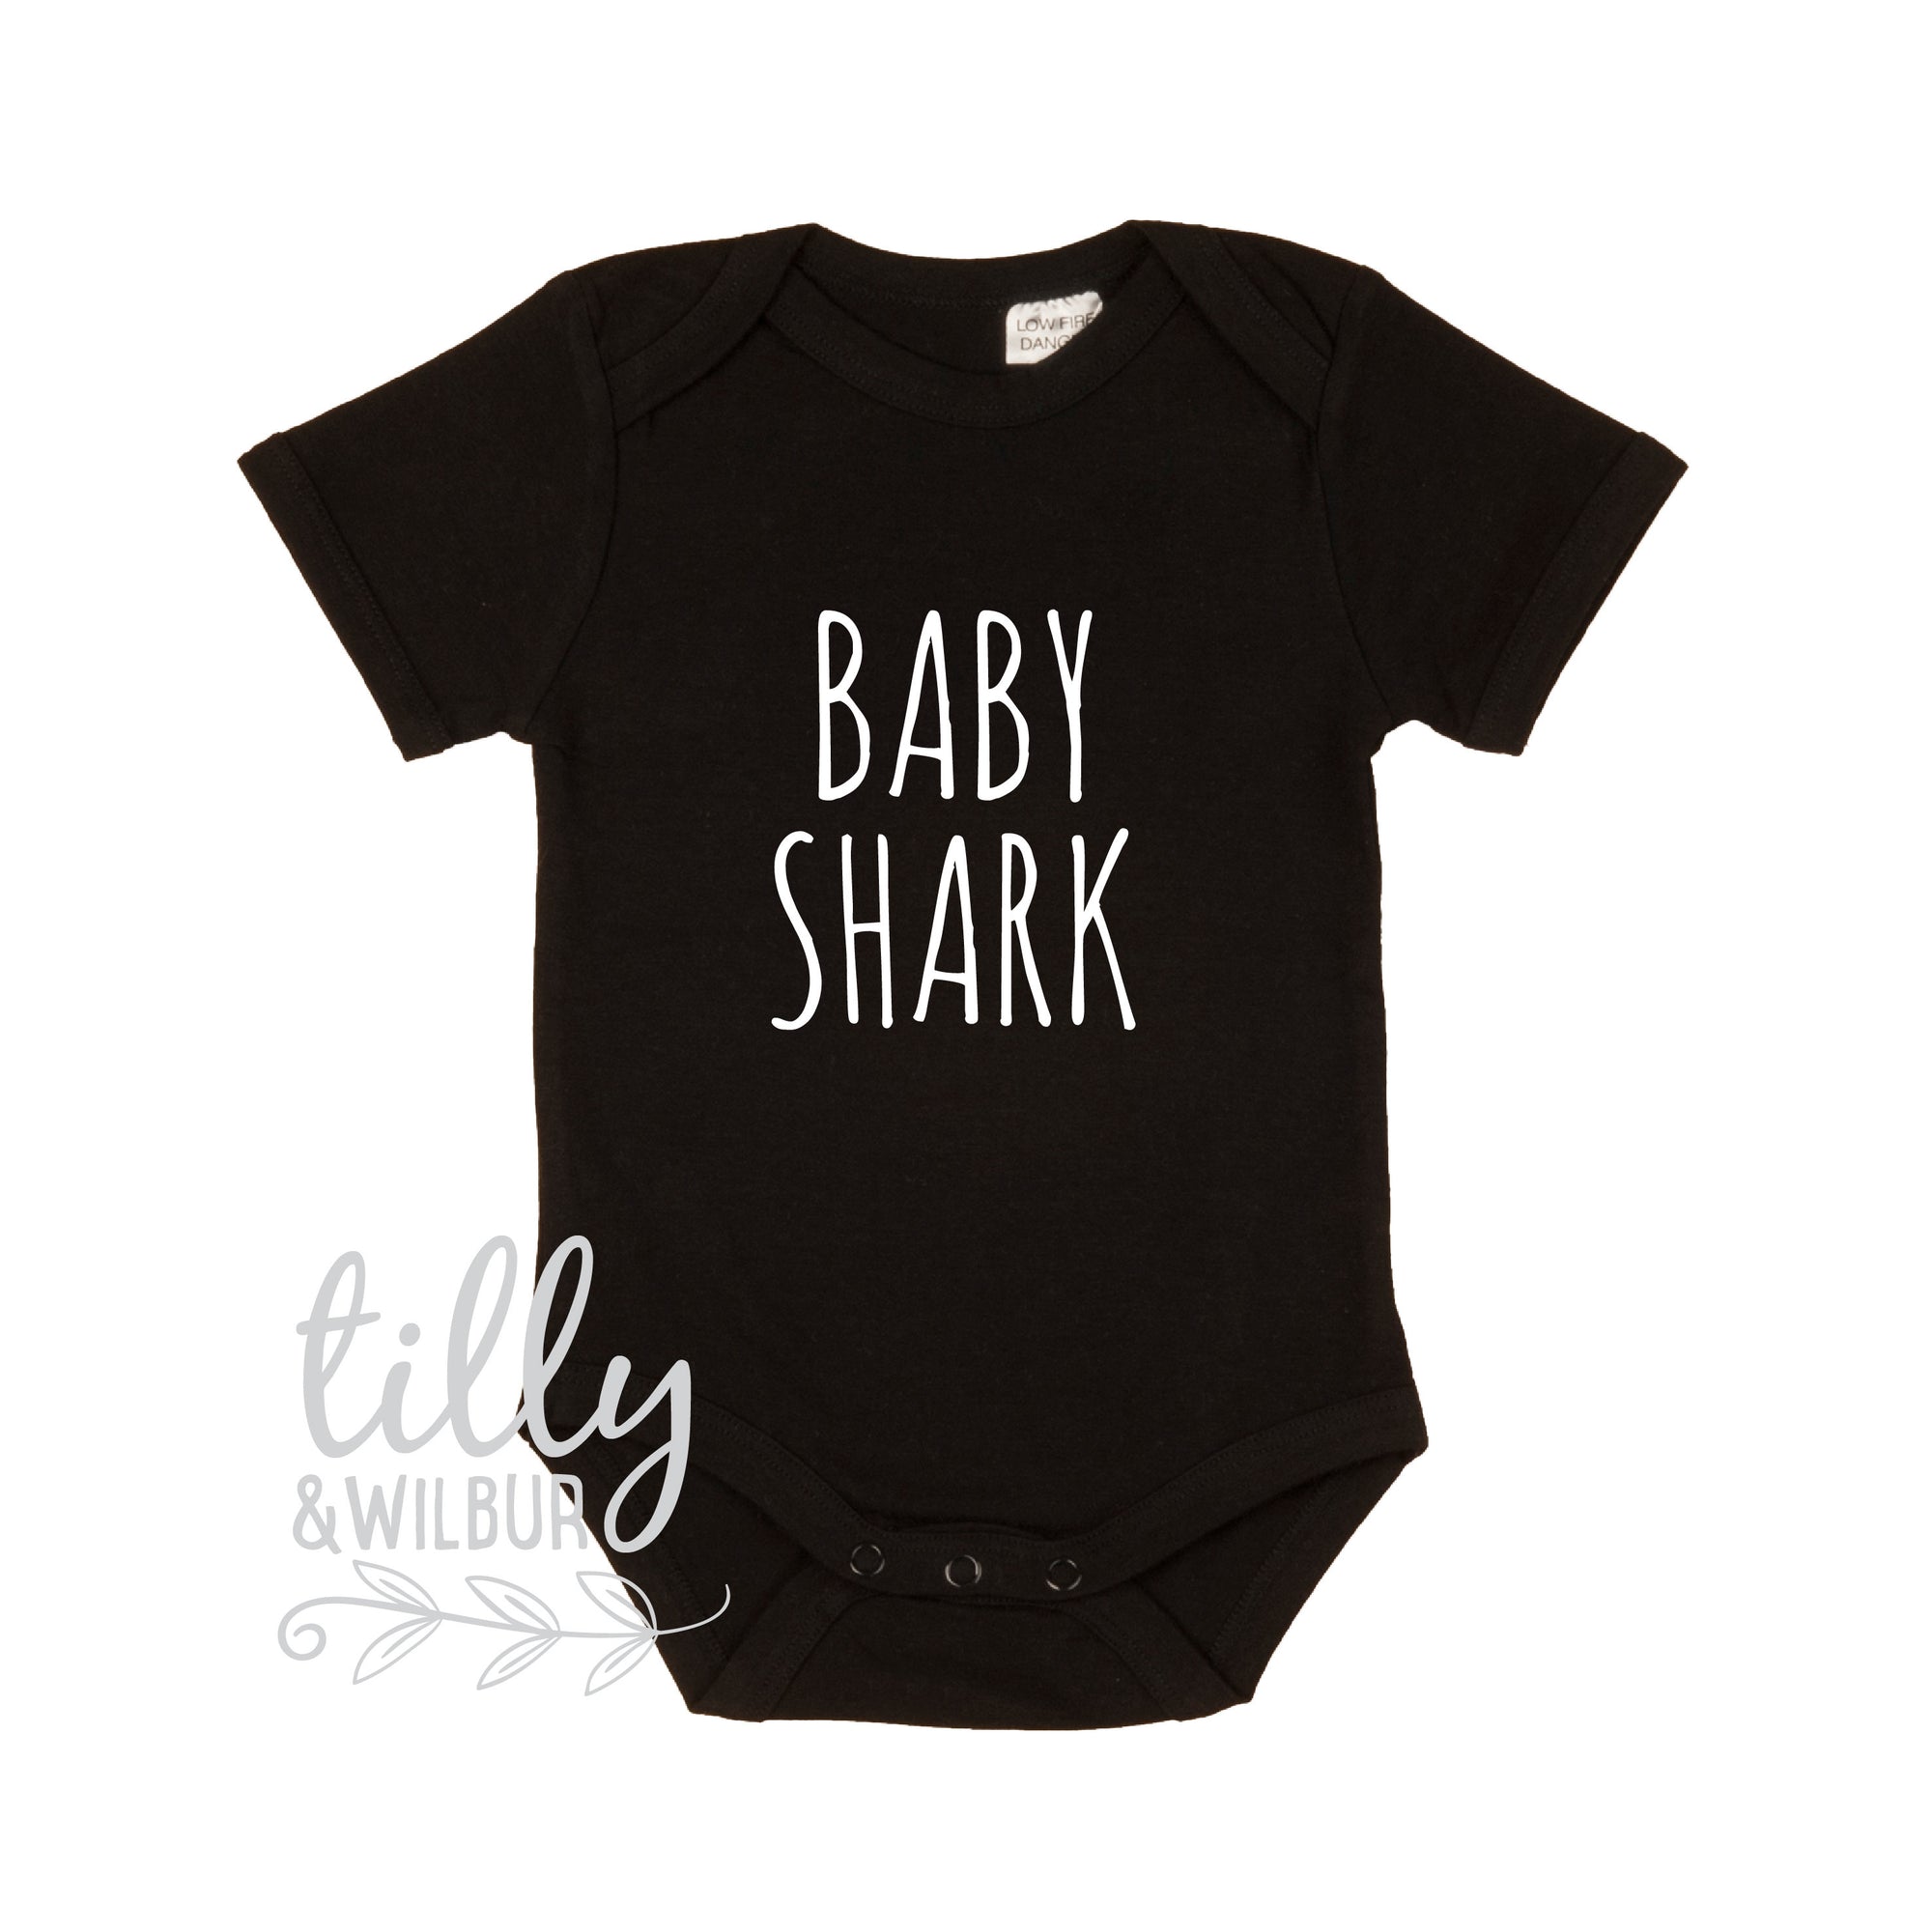 Baby Shark Bodysuit, Baby Shark Song, Shark T-Shirt, Shark Bodysuit, Shark Doo Doo, Baby Shark Birthday, Matchy Matchy, Family Set Available